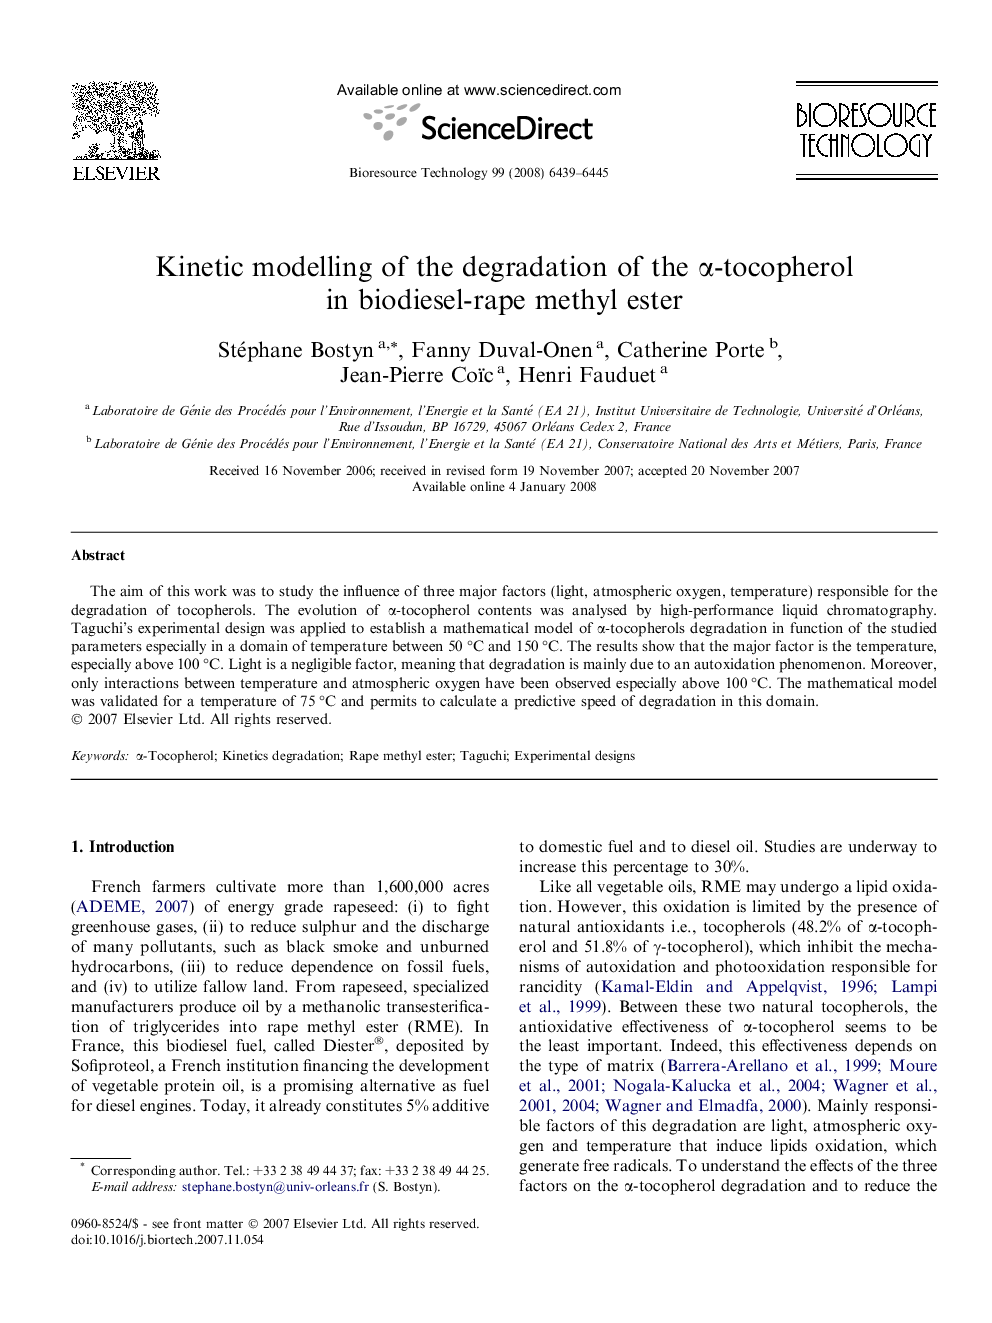 Kinetic modelling of the degradation of the α-tocopherol in biodiesel-rape methyl ester